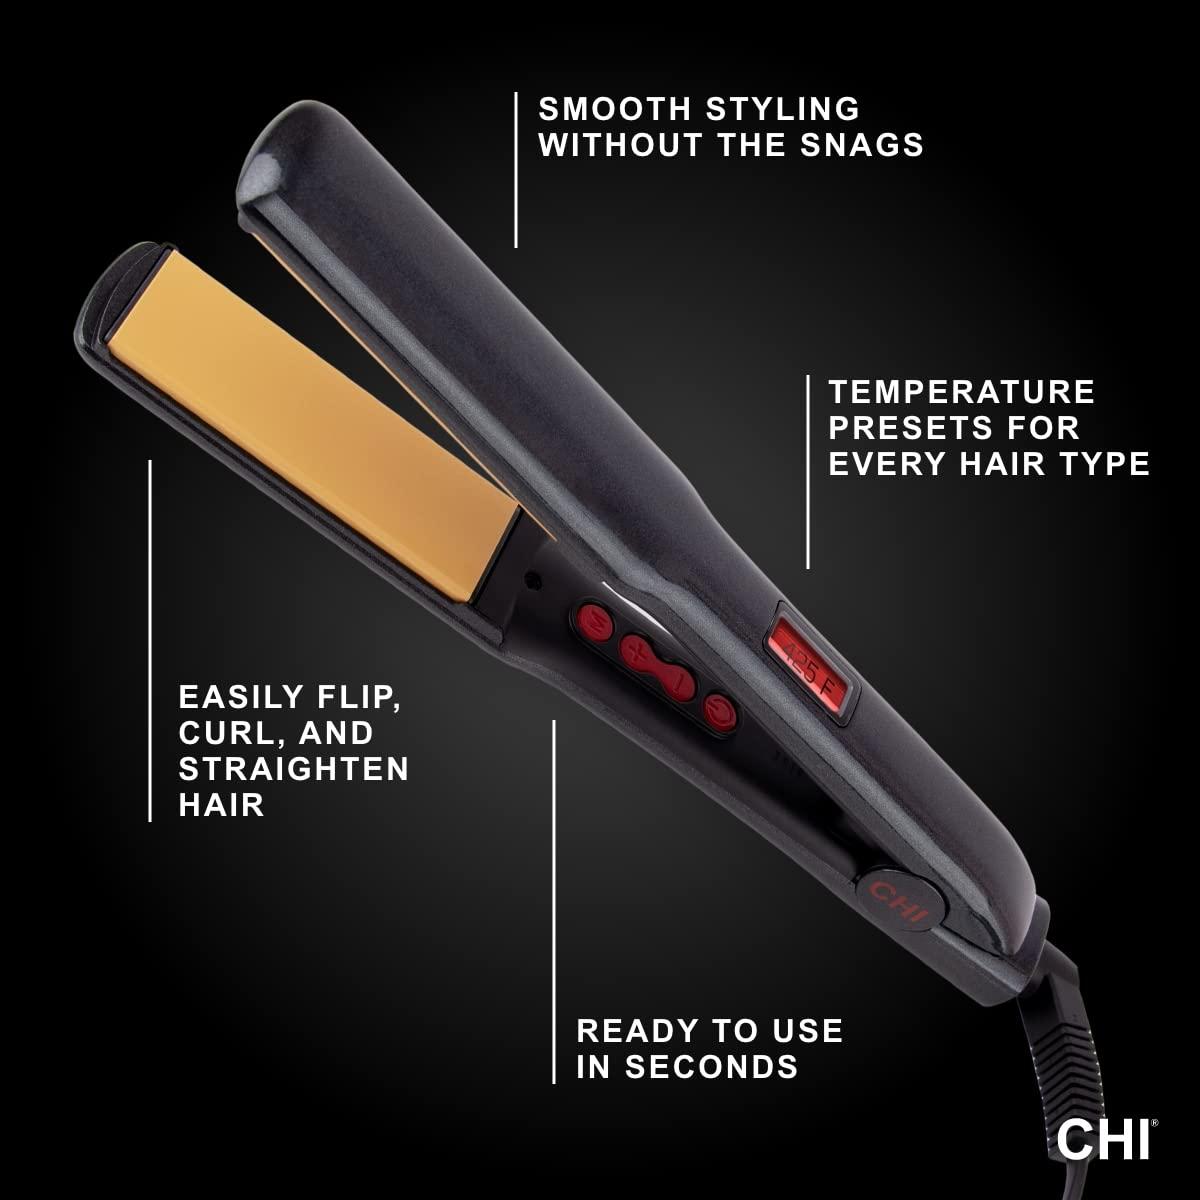 CHI Ceramic Hairstyling Flat Iron 1.5 - Walmart.com